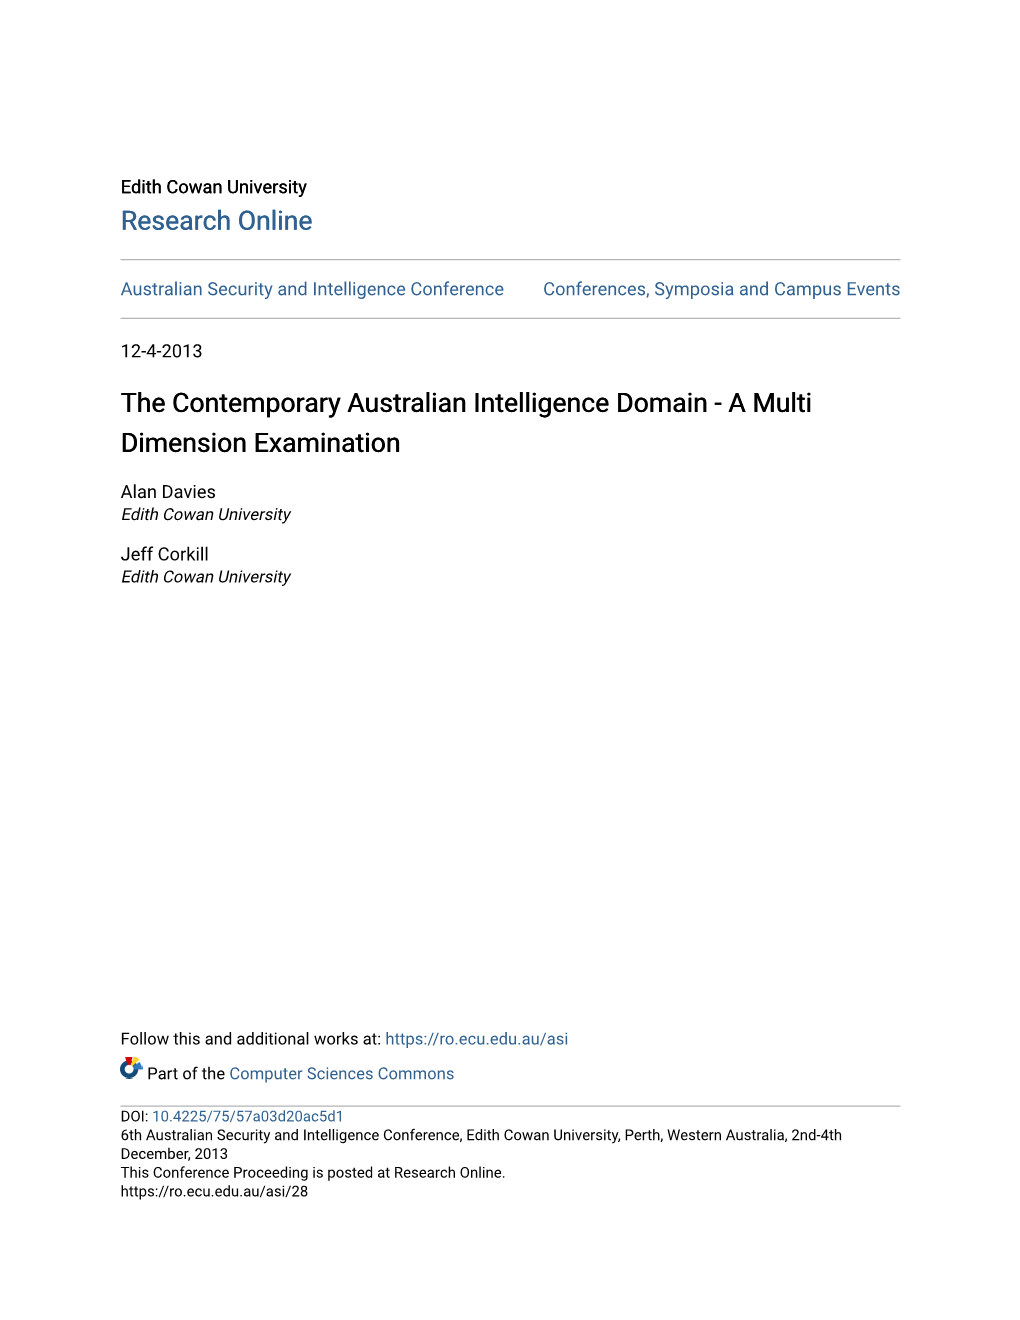 The Contemporary Australian Intelligence Domain - a Multi Dimension Examination